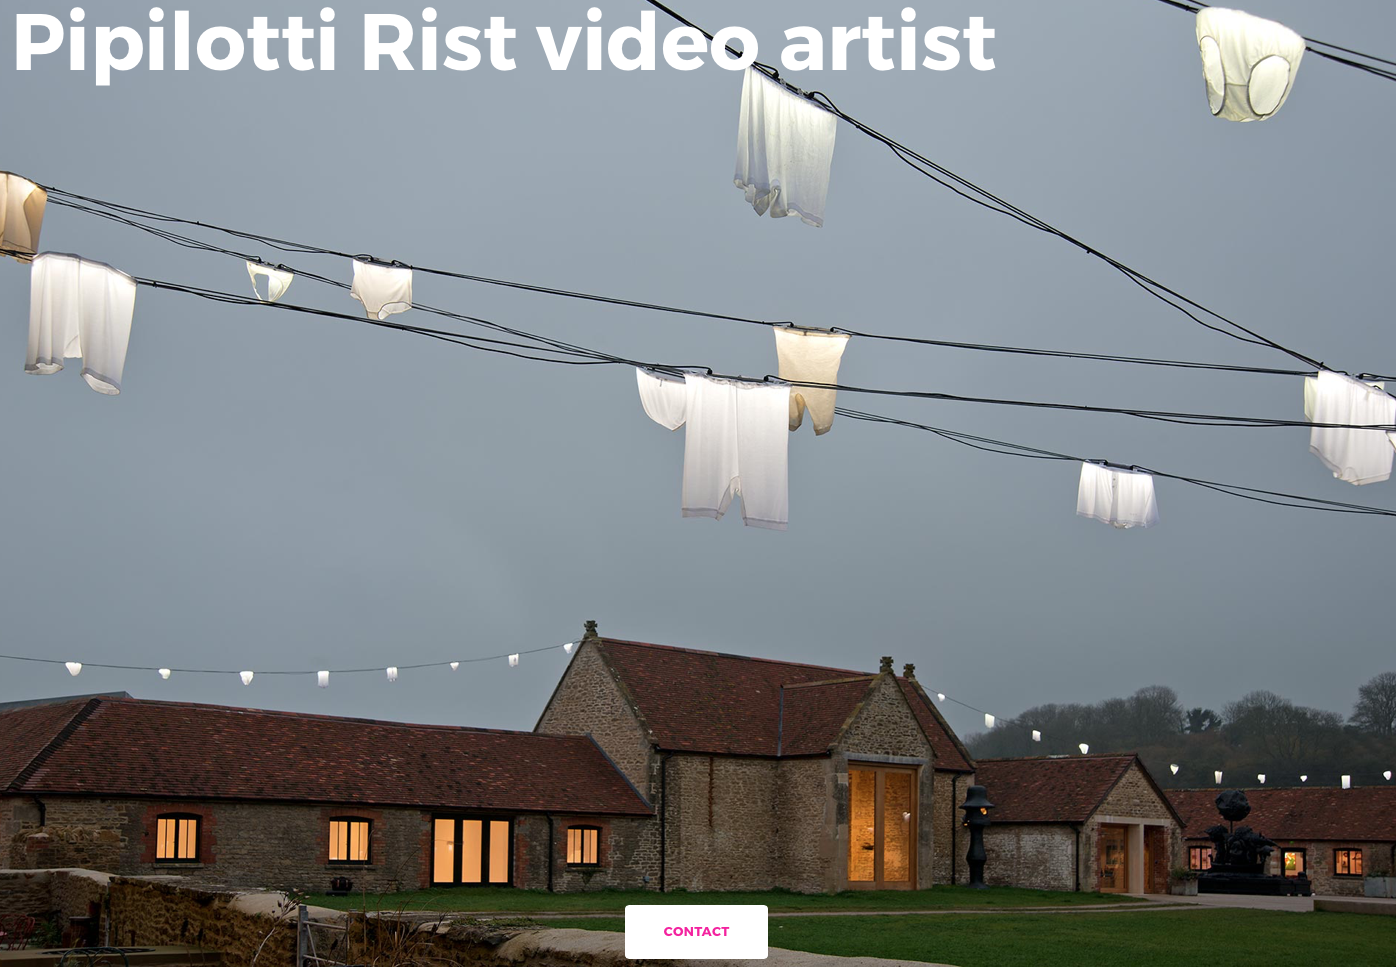 Pipilotti Rist website